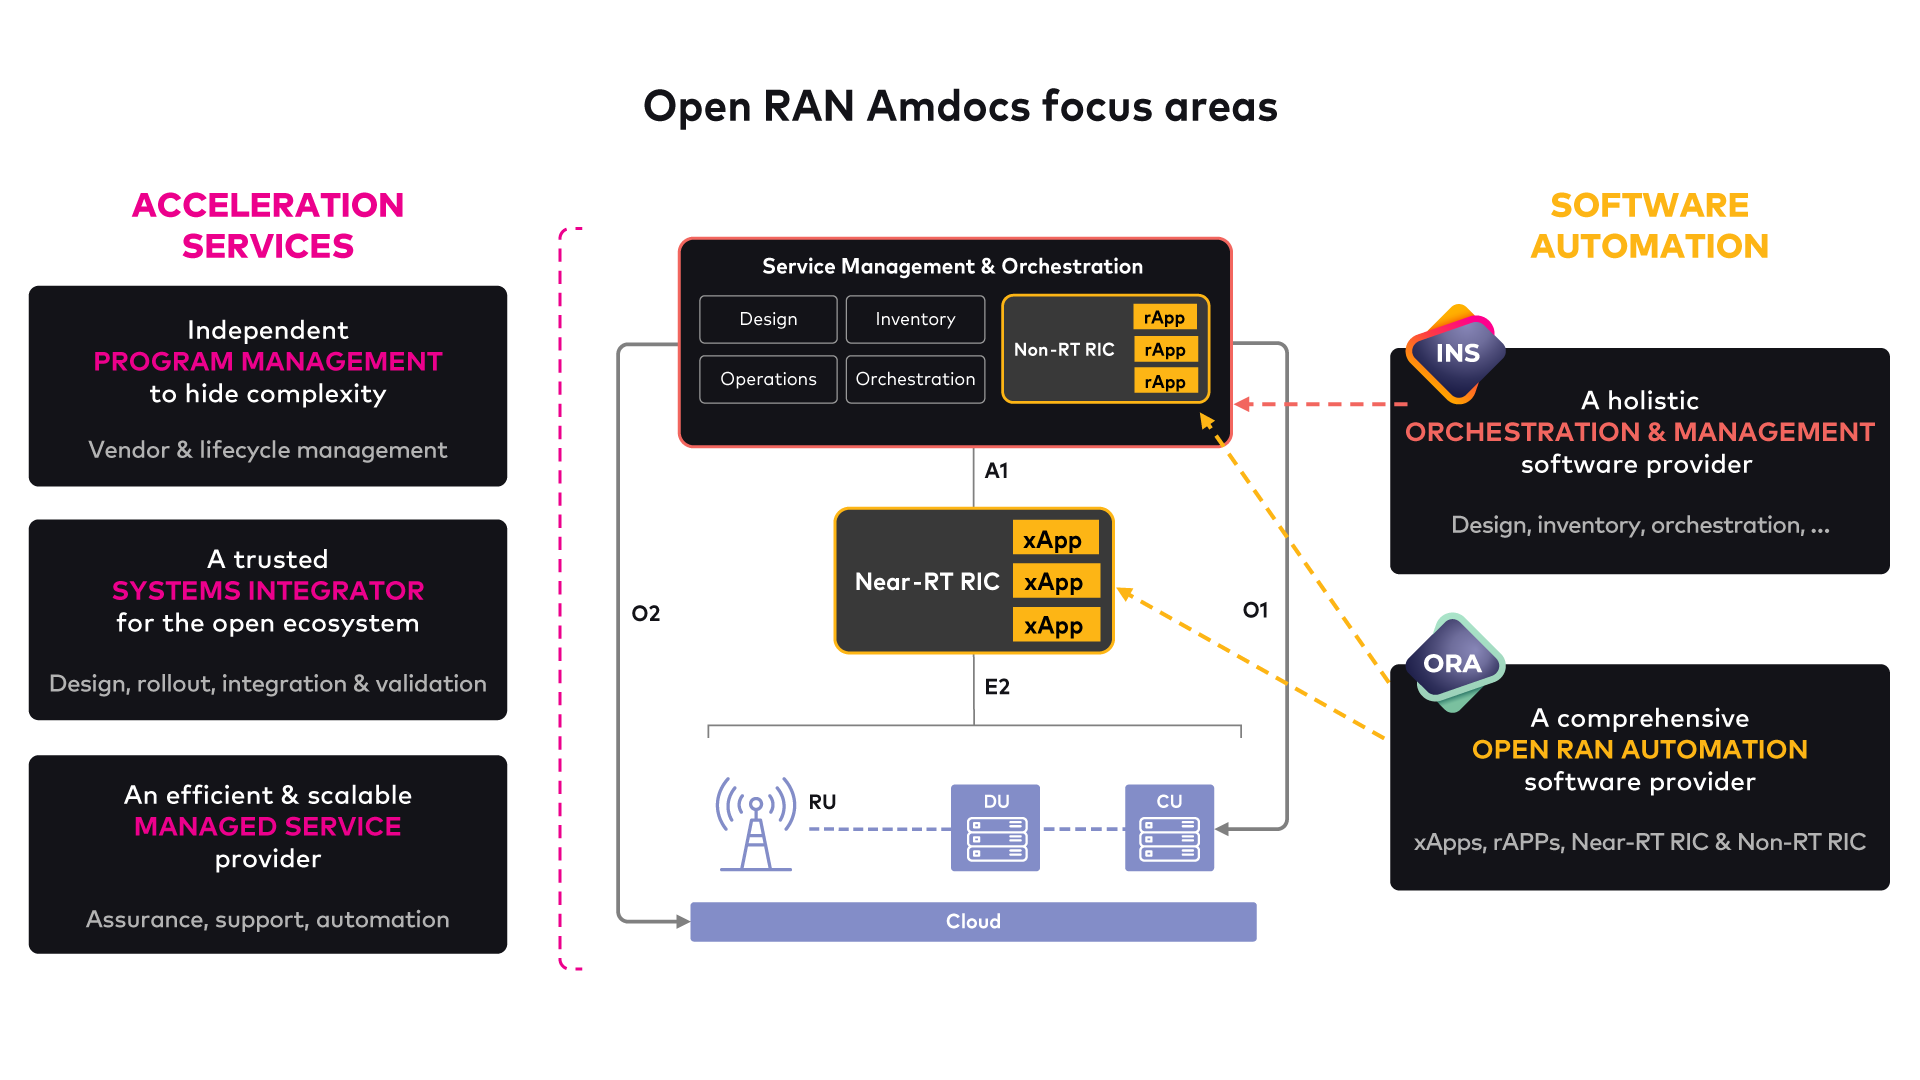 Amdocs Open RAN focus on x/rApps